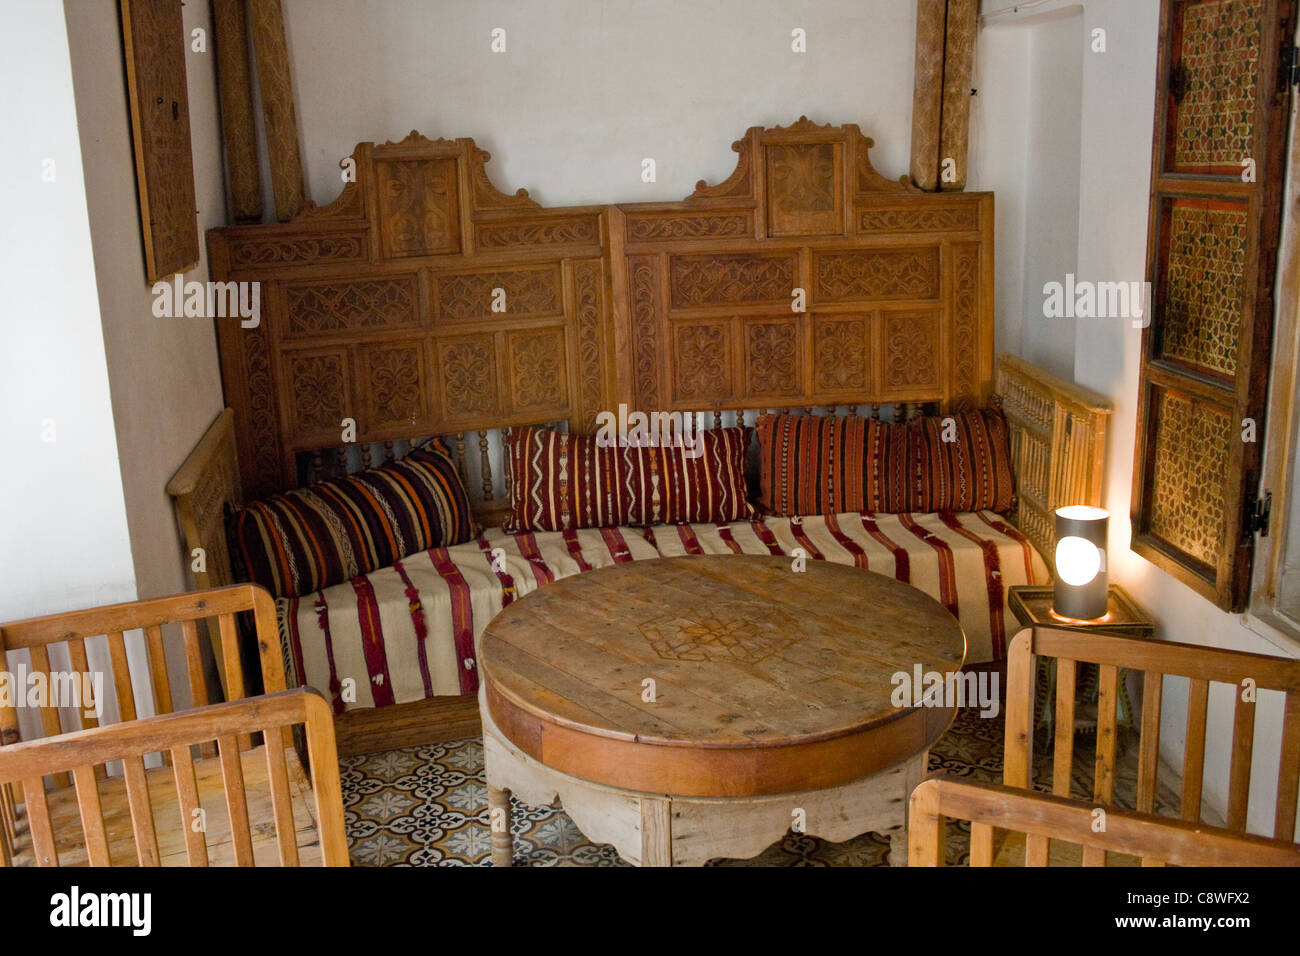 An interior of a Moroccan house Stock Photo